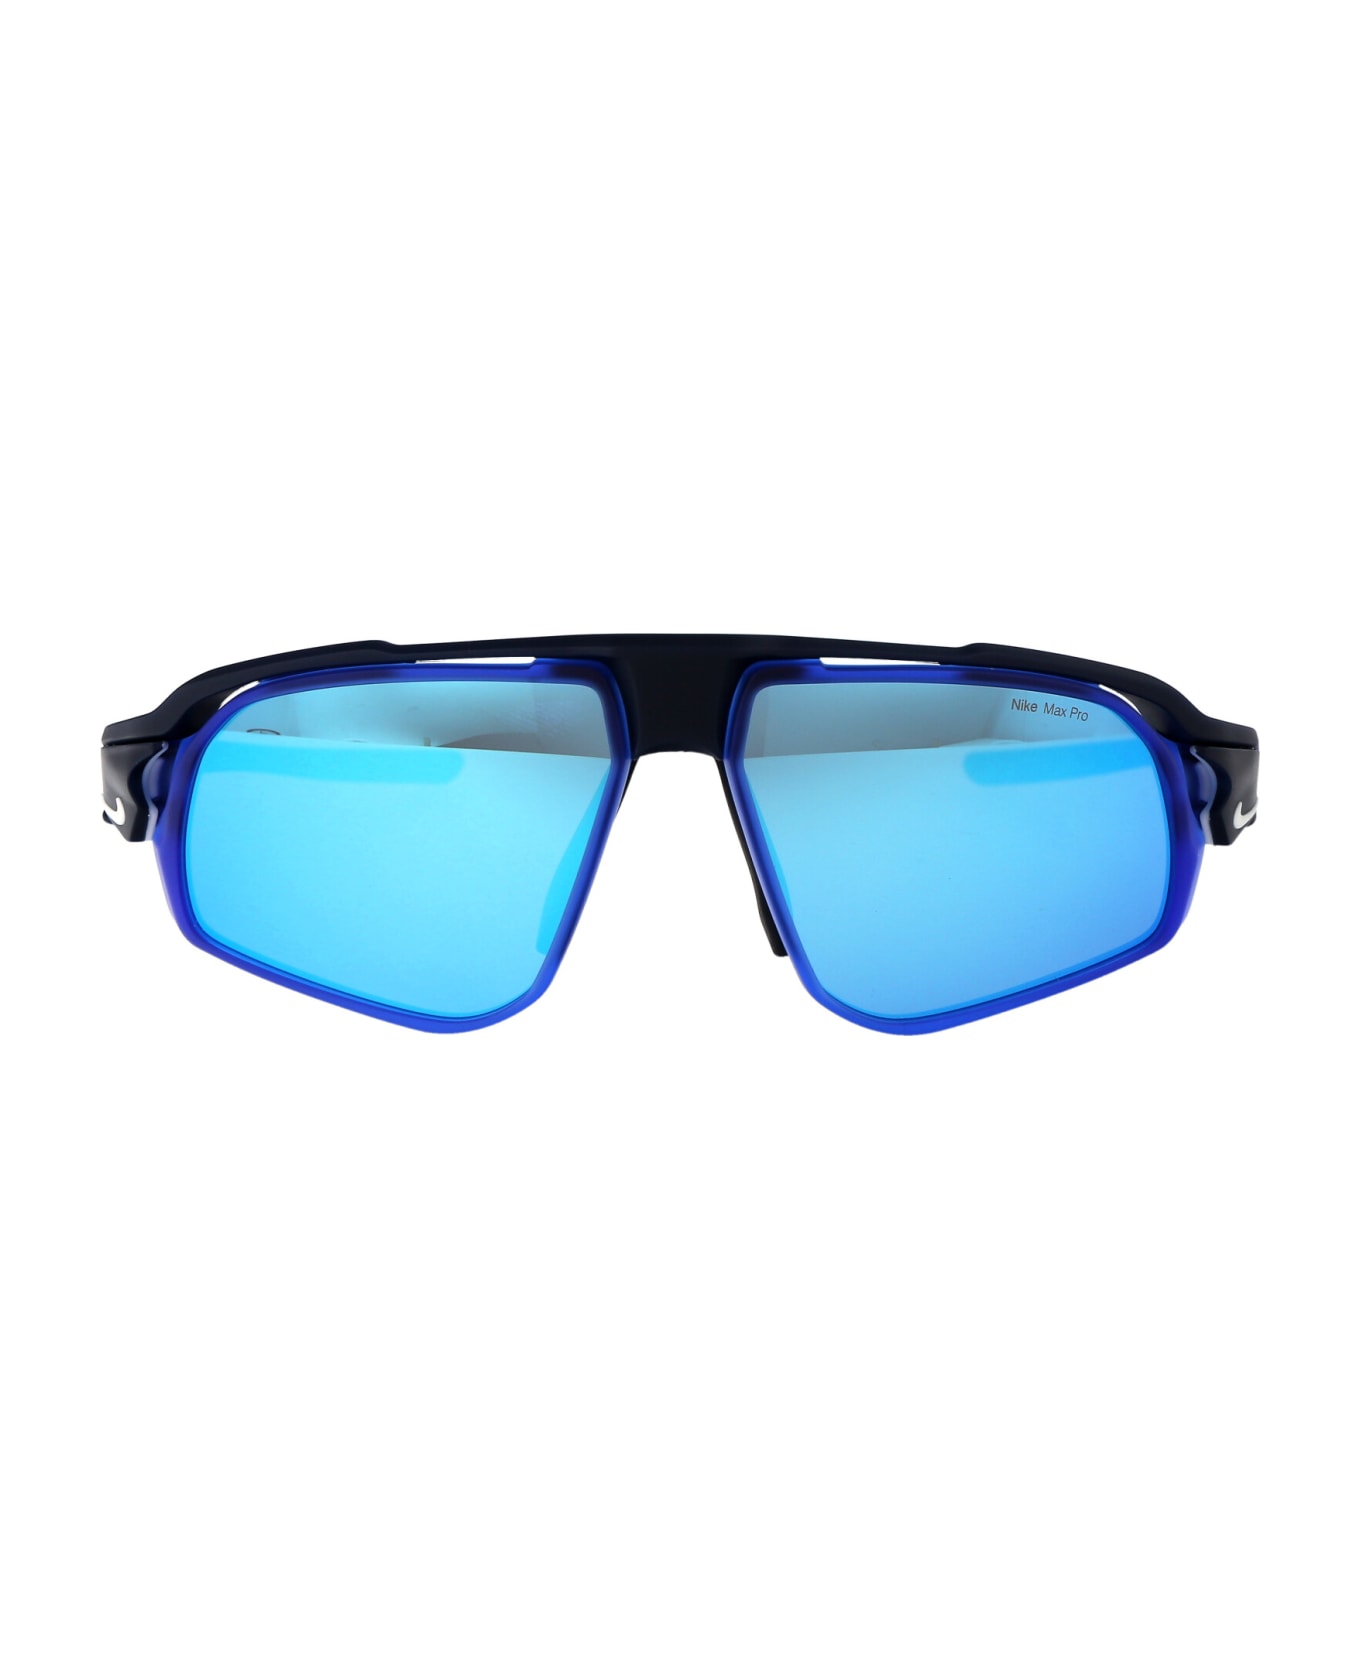 Nike Flyfree M Sunglasses - 410 BLUE MIRROR MATTE NAVY